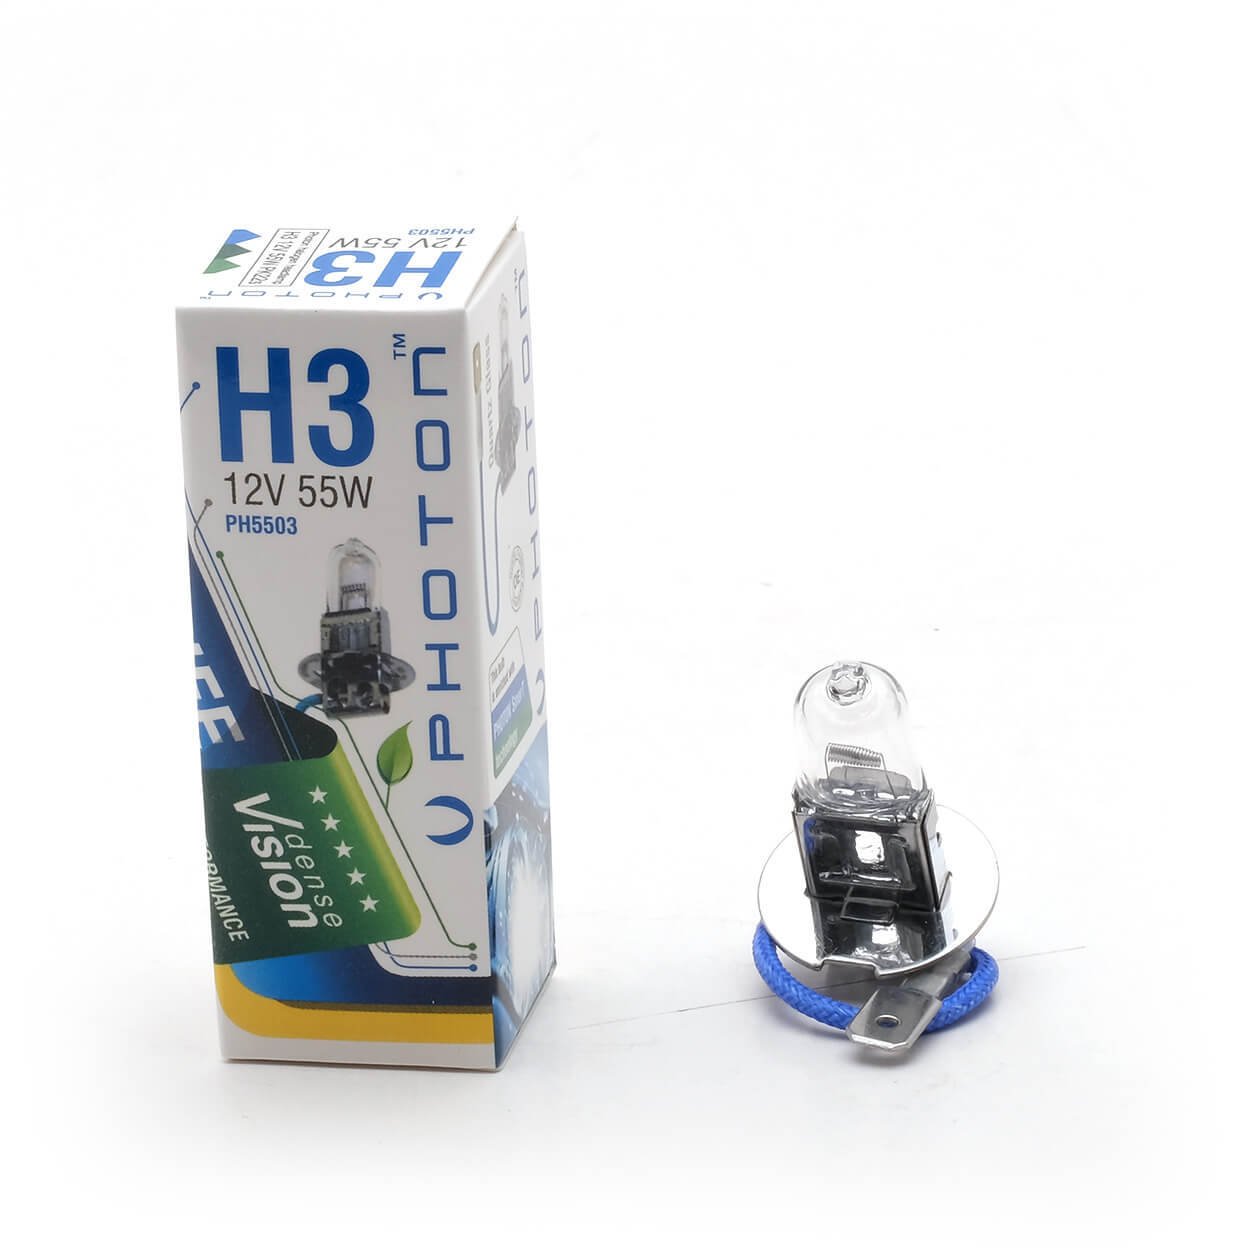 Photon H3 Standart Halogen PH5503